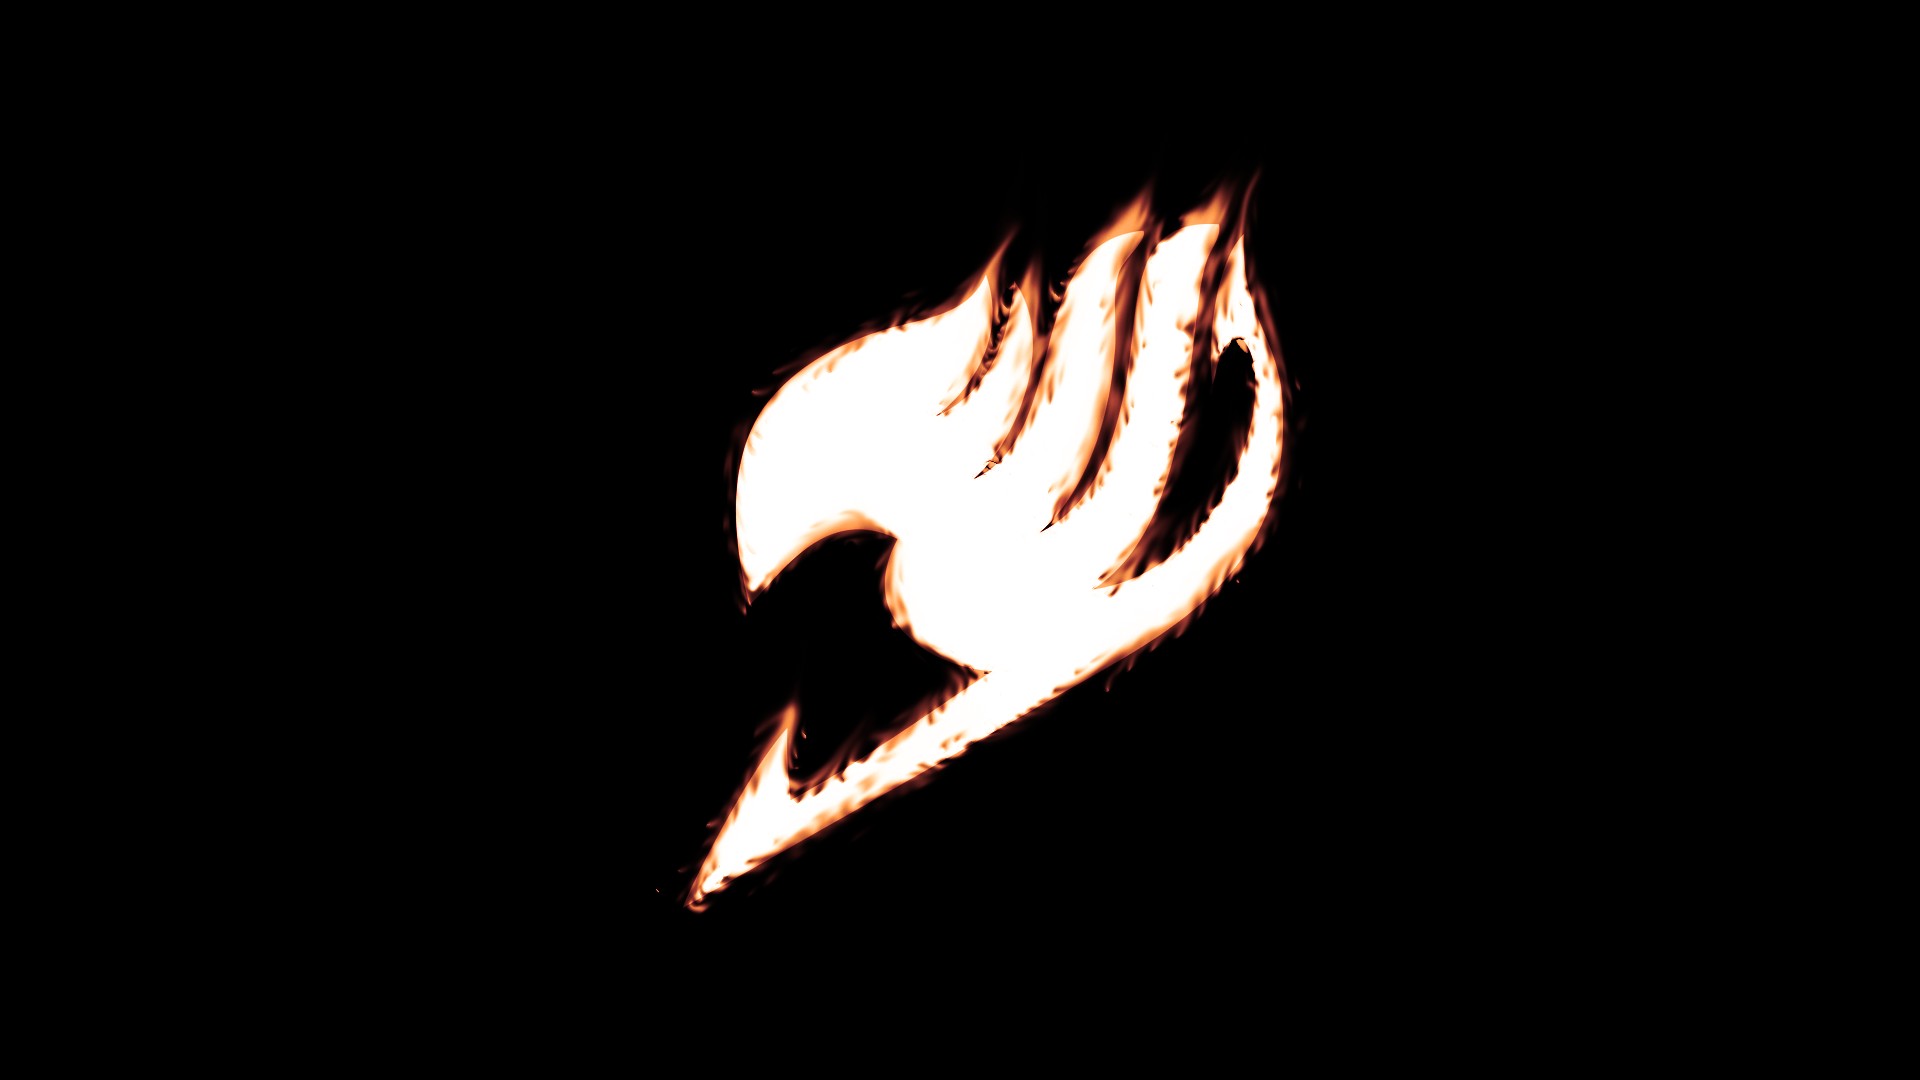 fairy tail logo wallpaper,flame,heat,fire,darkness,symbol